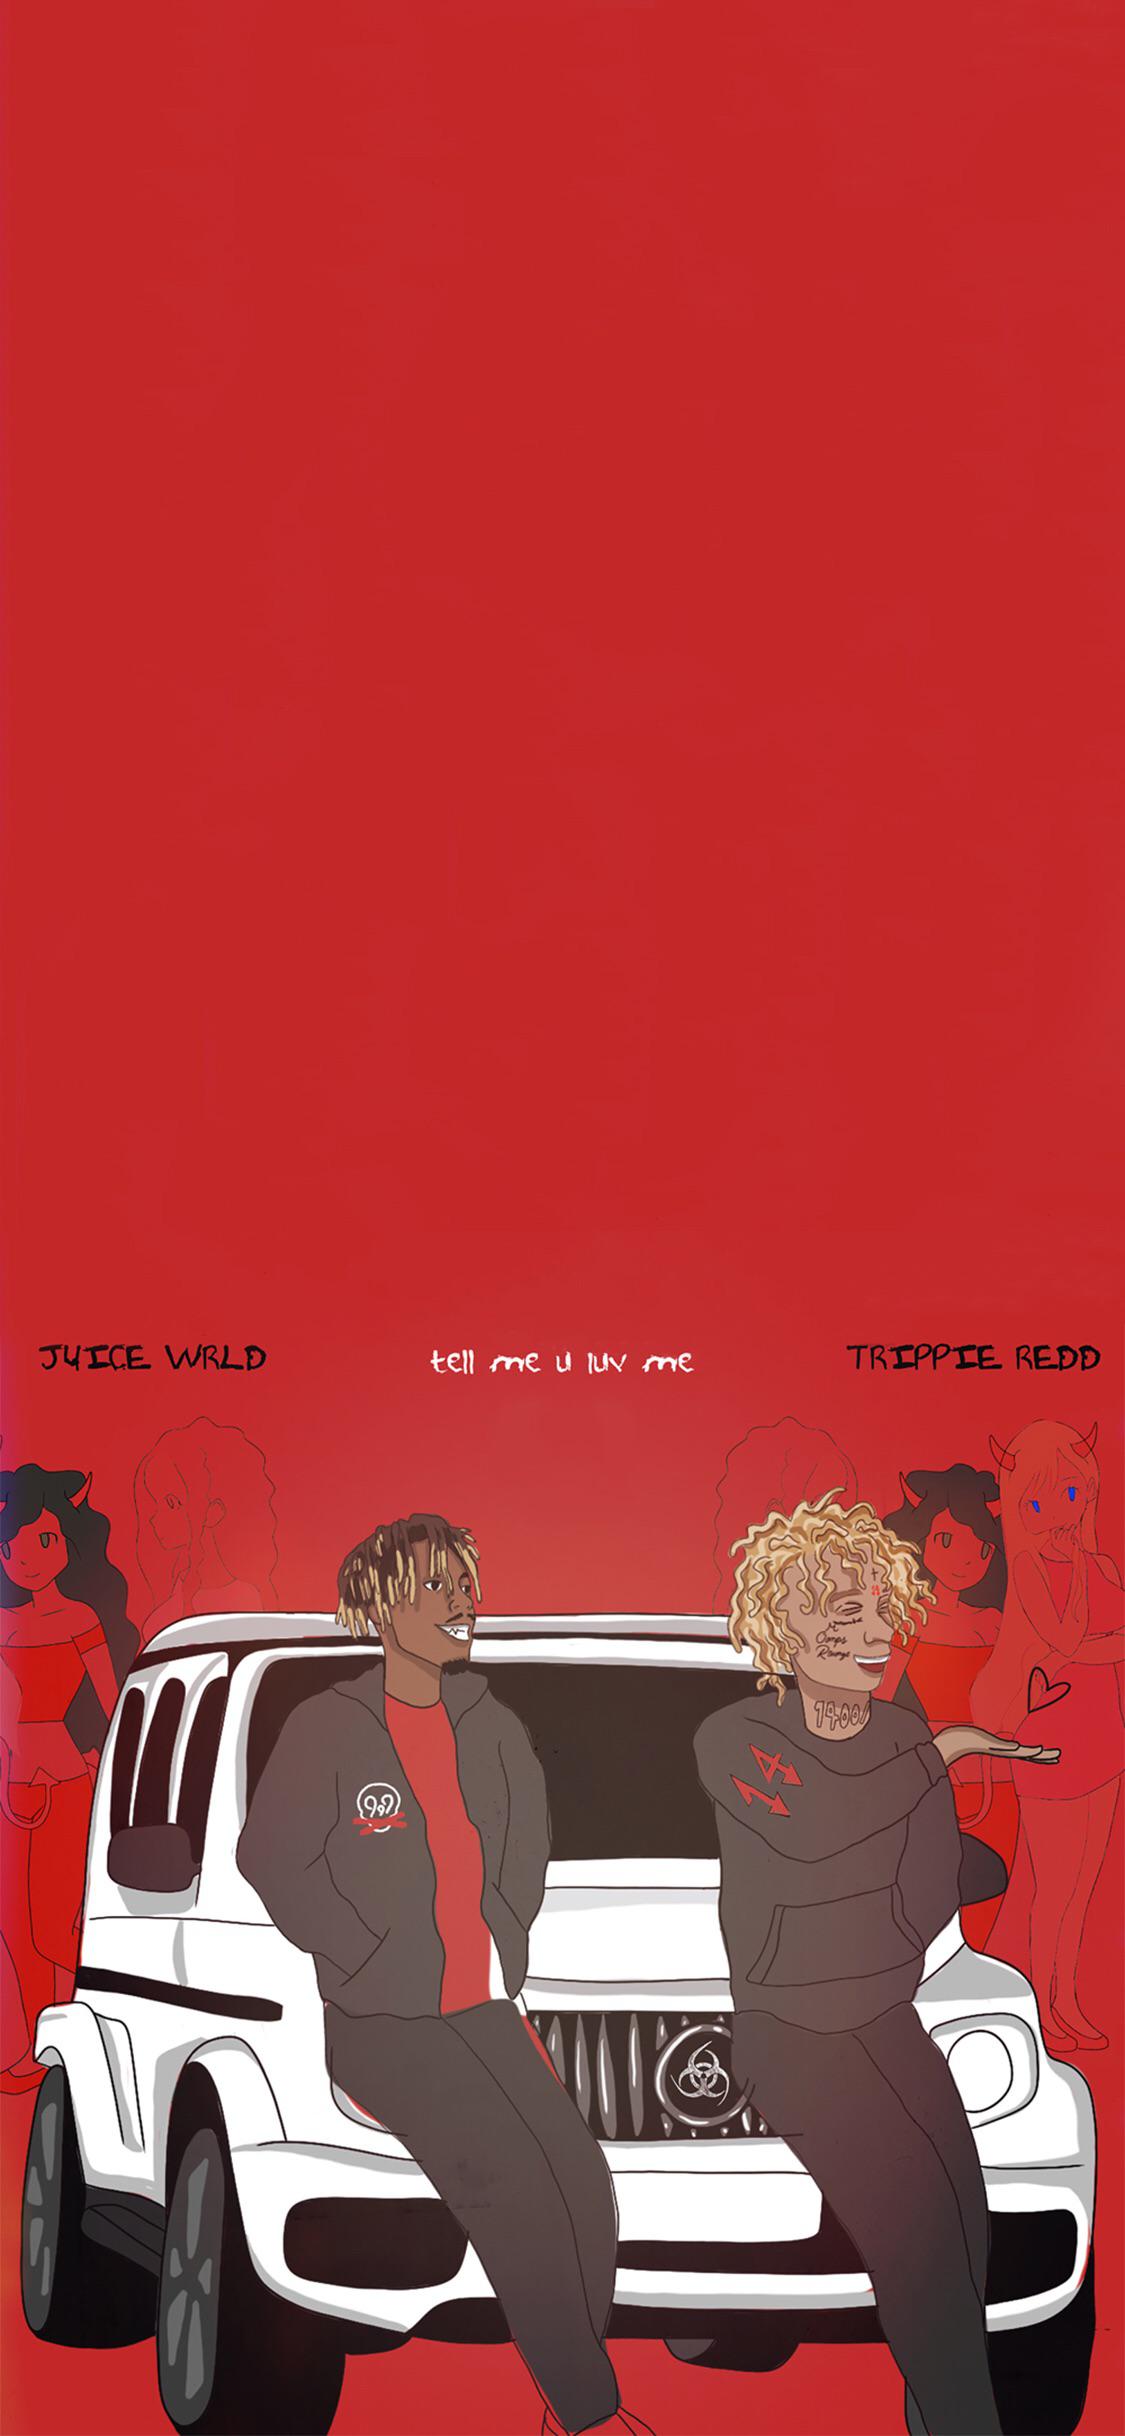 “Tell me u luv me” Wallpaper by Juice Wrld and Trippie Redd